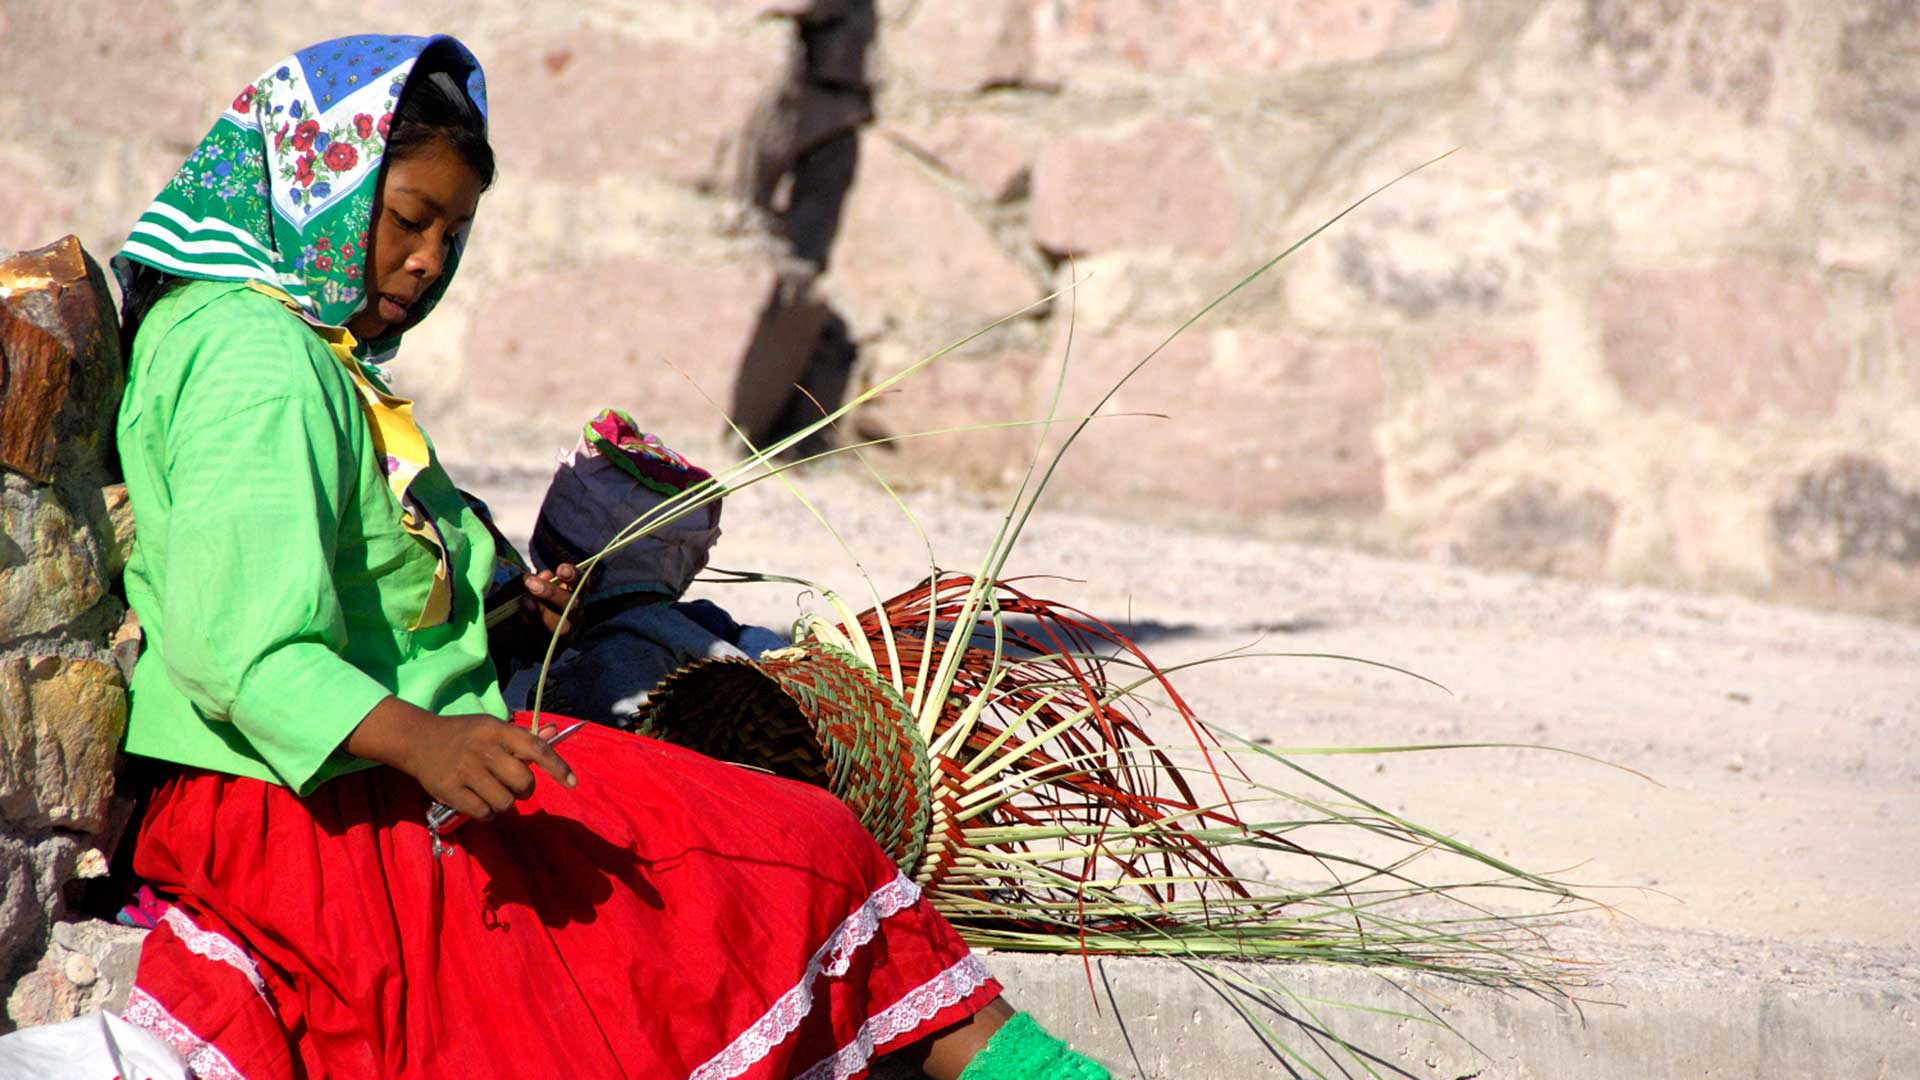 Tarahumara Indian in typical attire making baskets, Chihuahua, Mexico